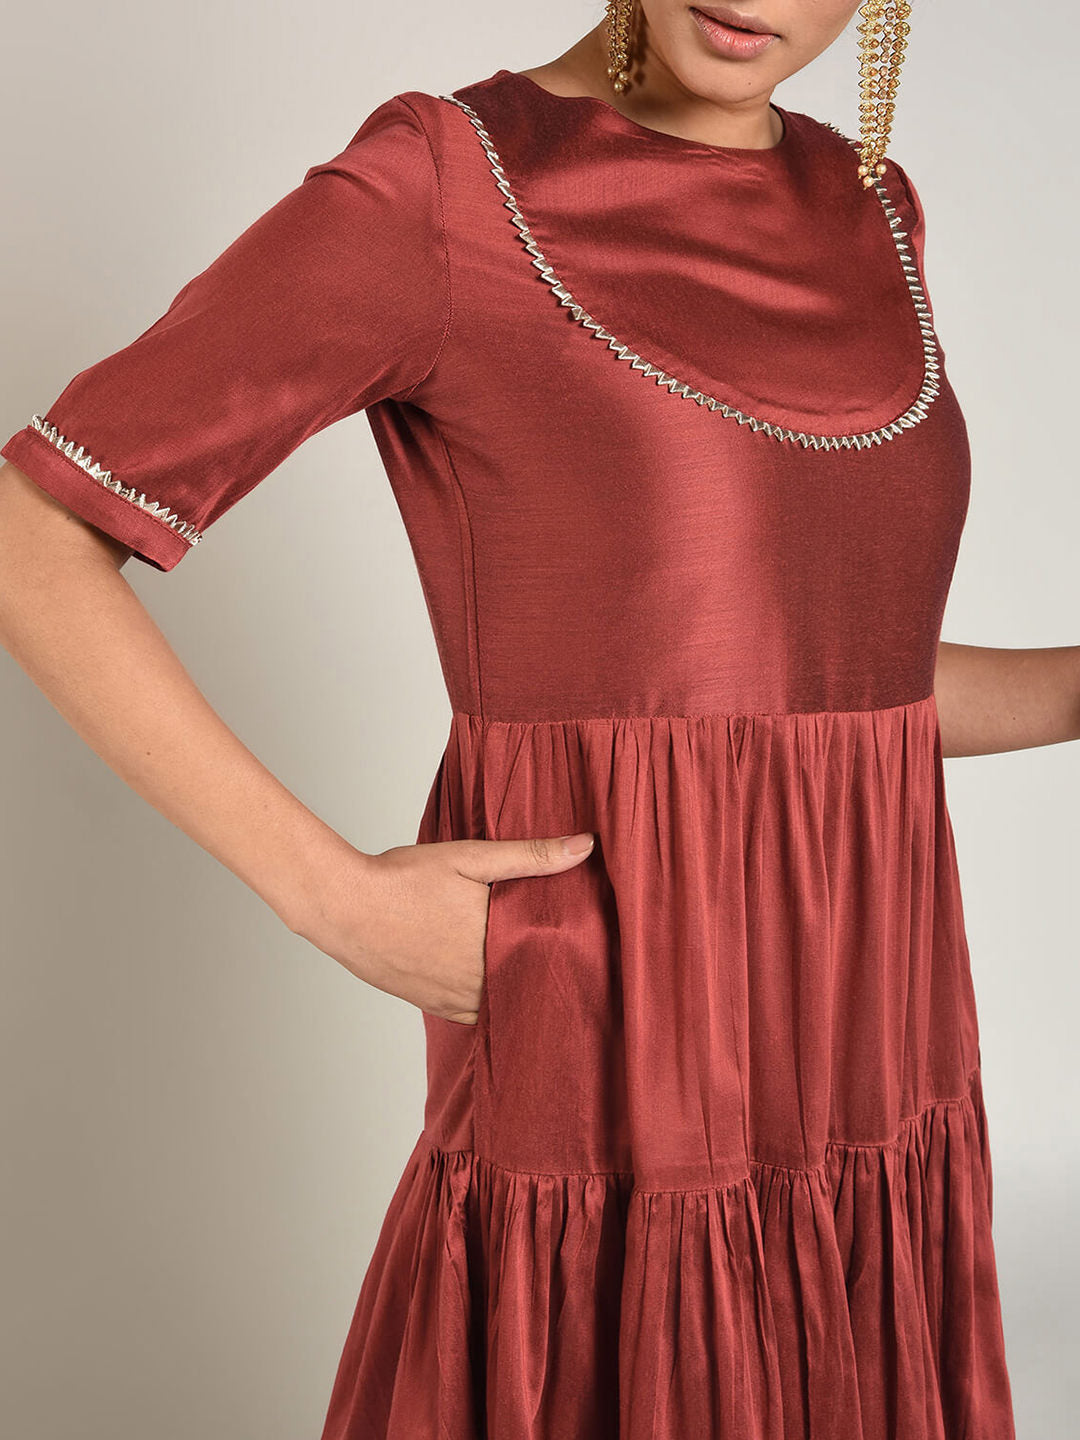 Abhishti Cotton Silk Tiered Flared Kurta with Lace Yoke detail Set